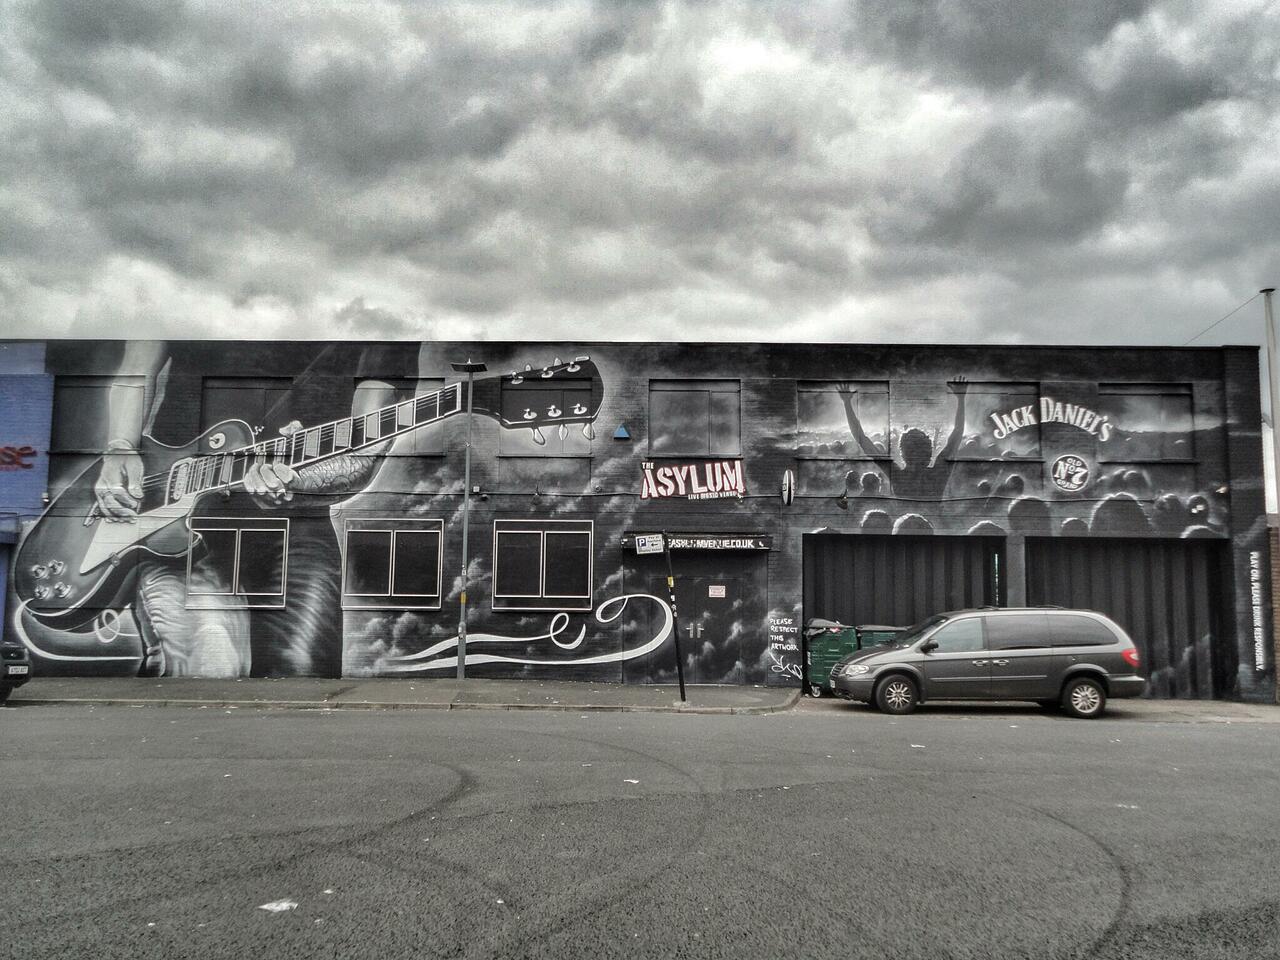 RT @djcolatron: Hot new wall for @TheAsylumVenue by @Titlegraffiti
#streetart #graffiti #art #arte #mural #Birmingham #lovebrum #JQ http://t.co/p0Y4D07xfC